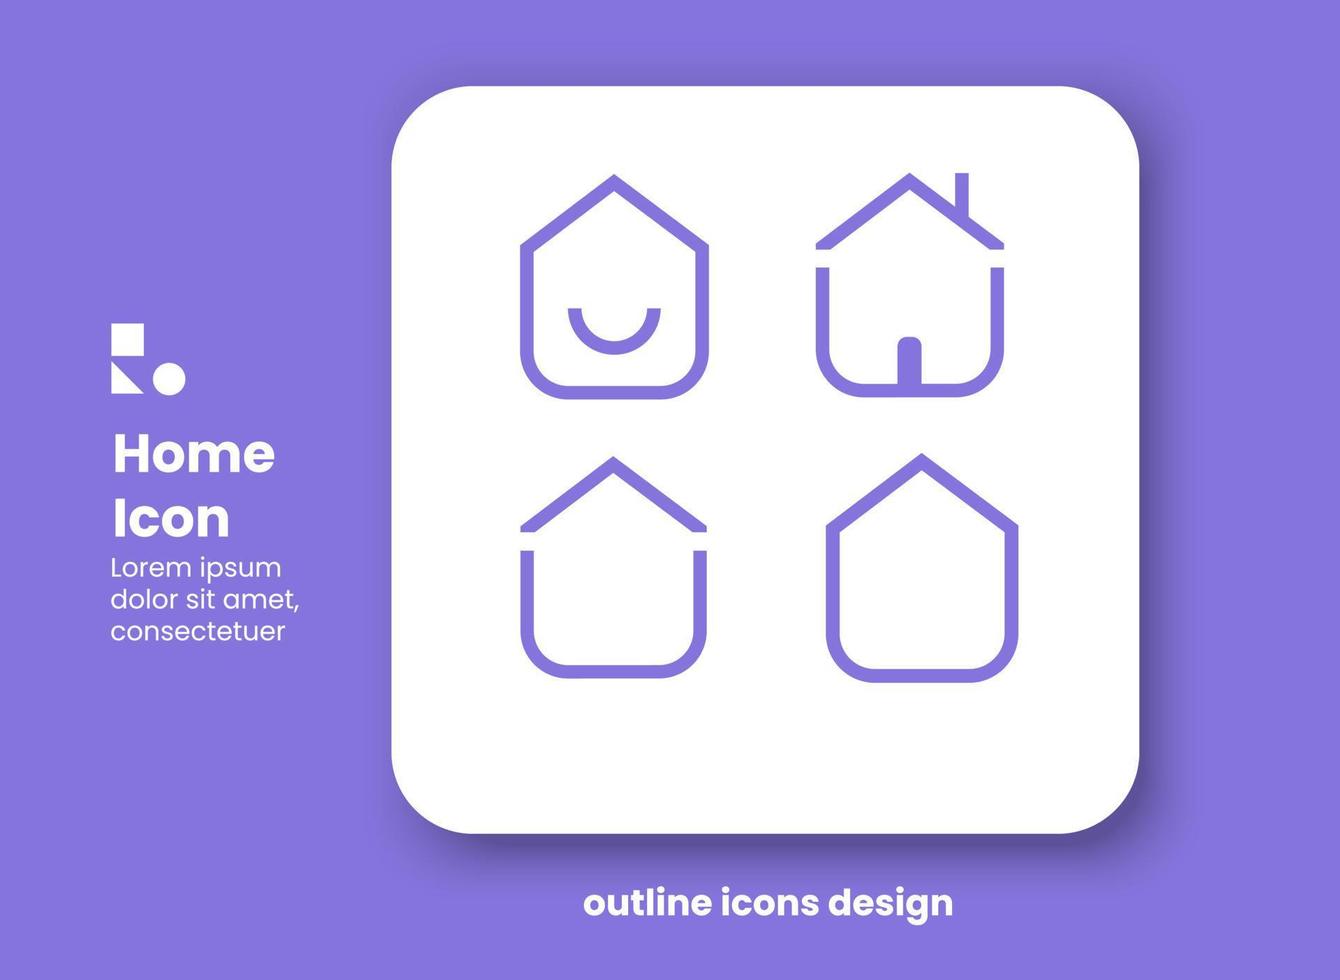 home icon design variations. home icon design concept. vector